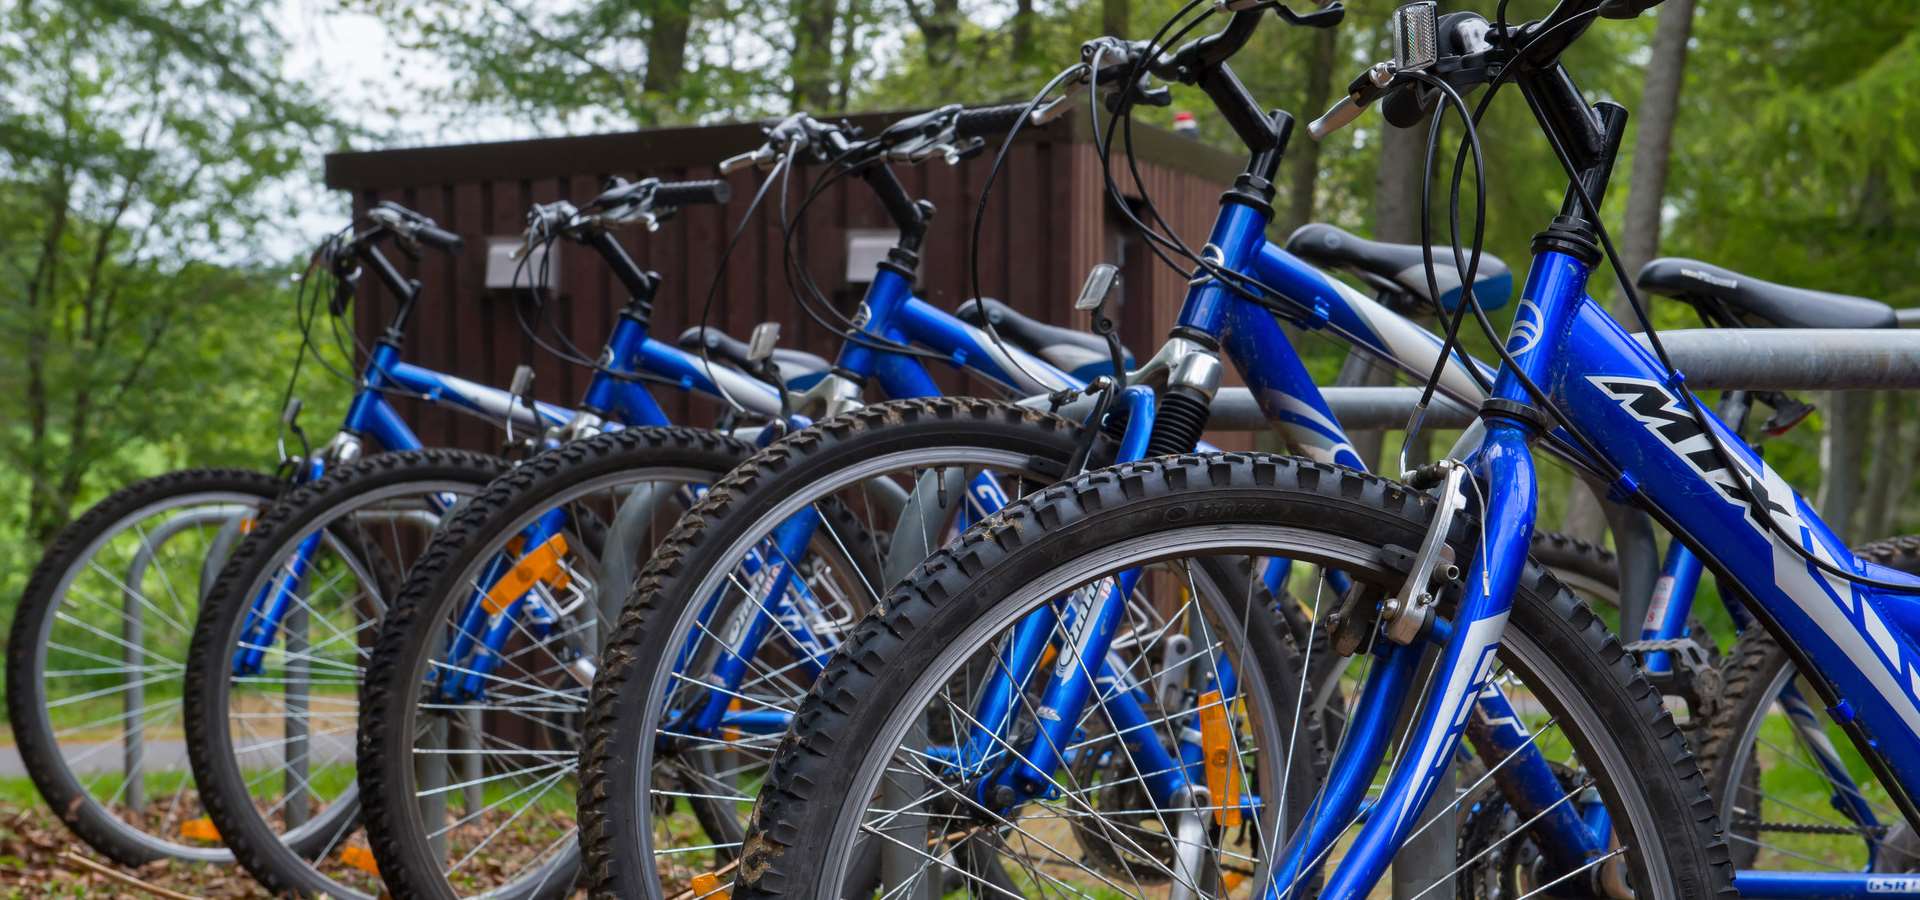 A row of blue bikes